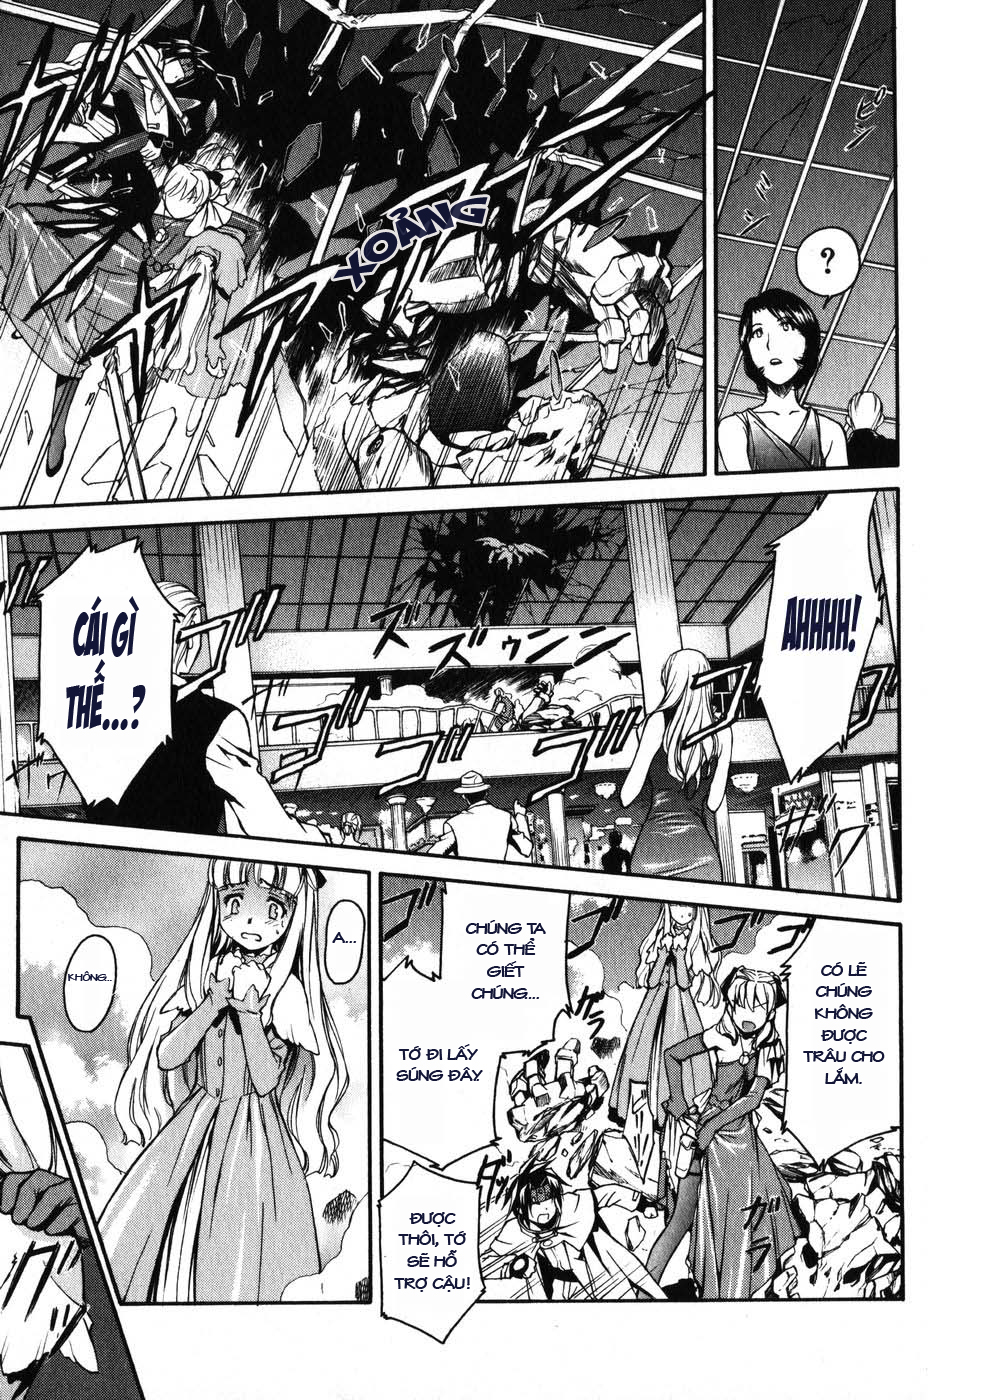 [Manga] Chrono Crusade (Đọc online tại SSF) CHRNO-CRUSADE-01-081